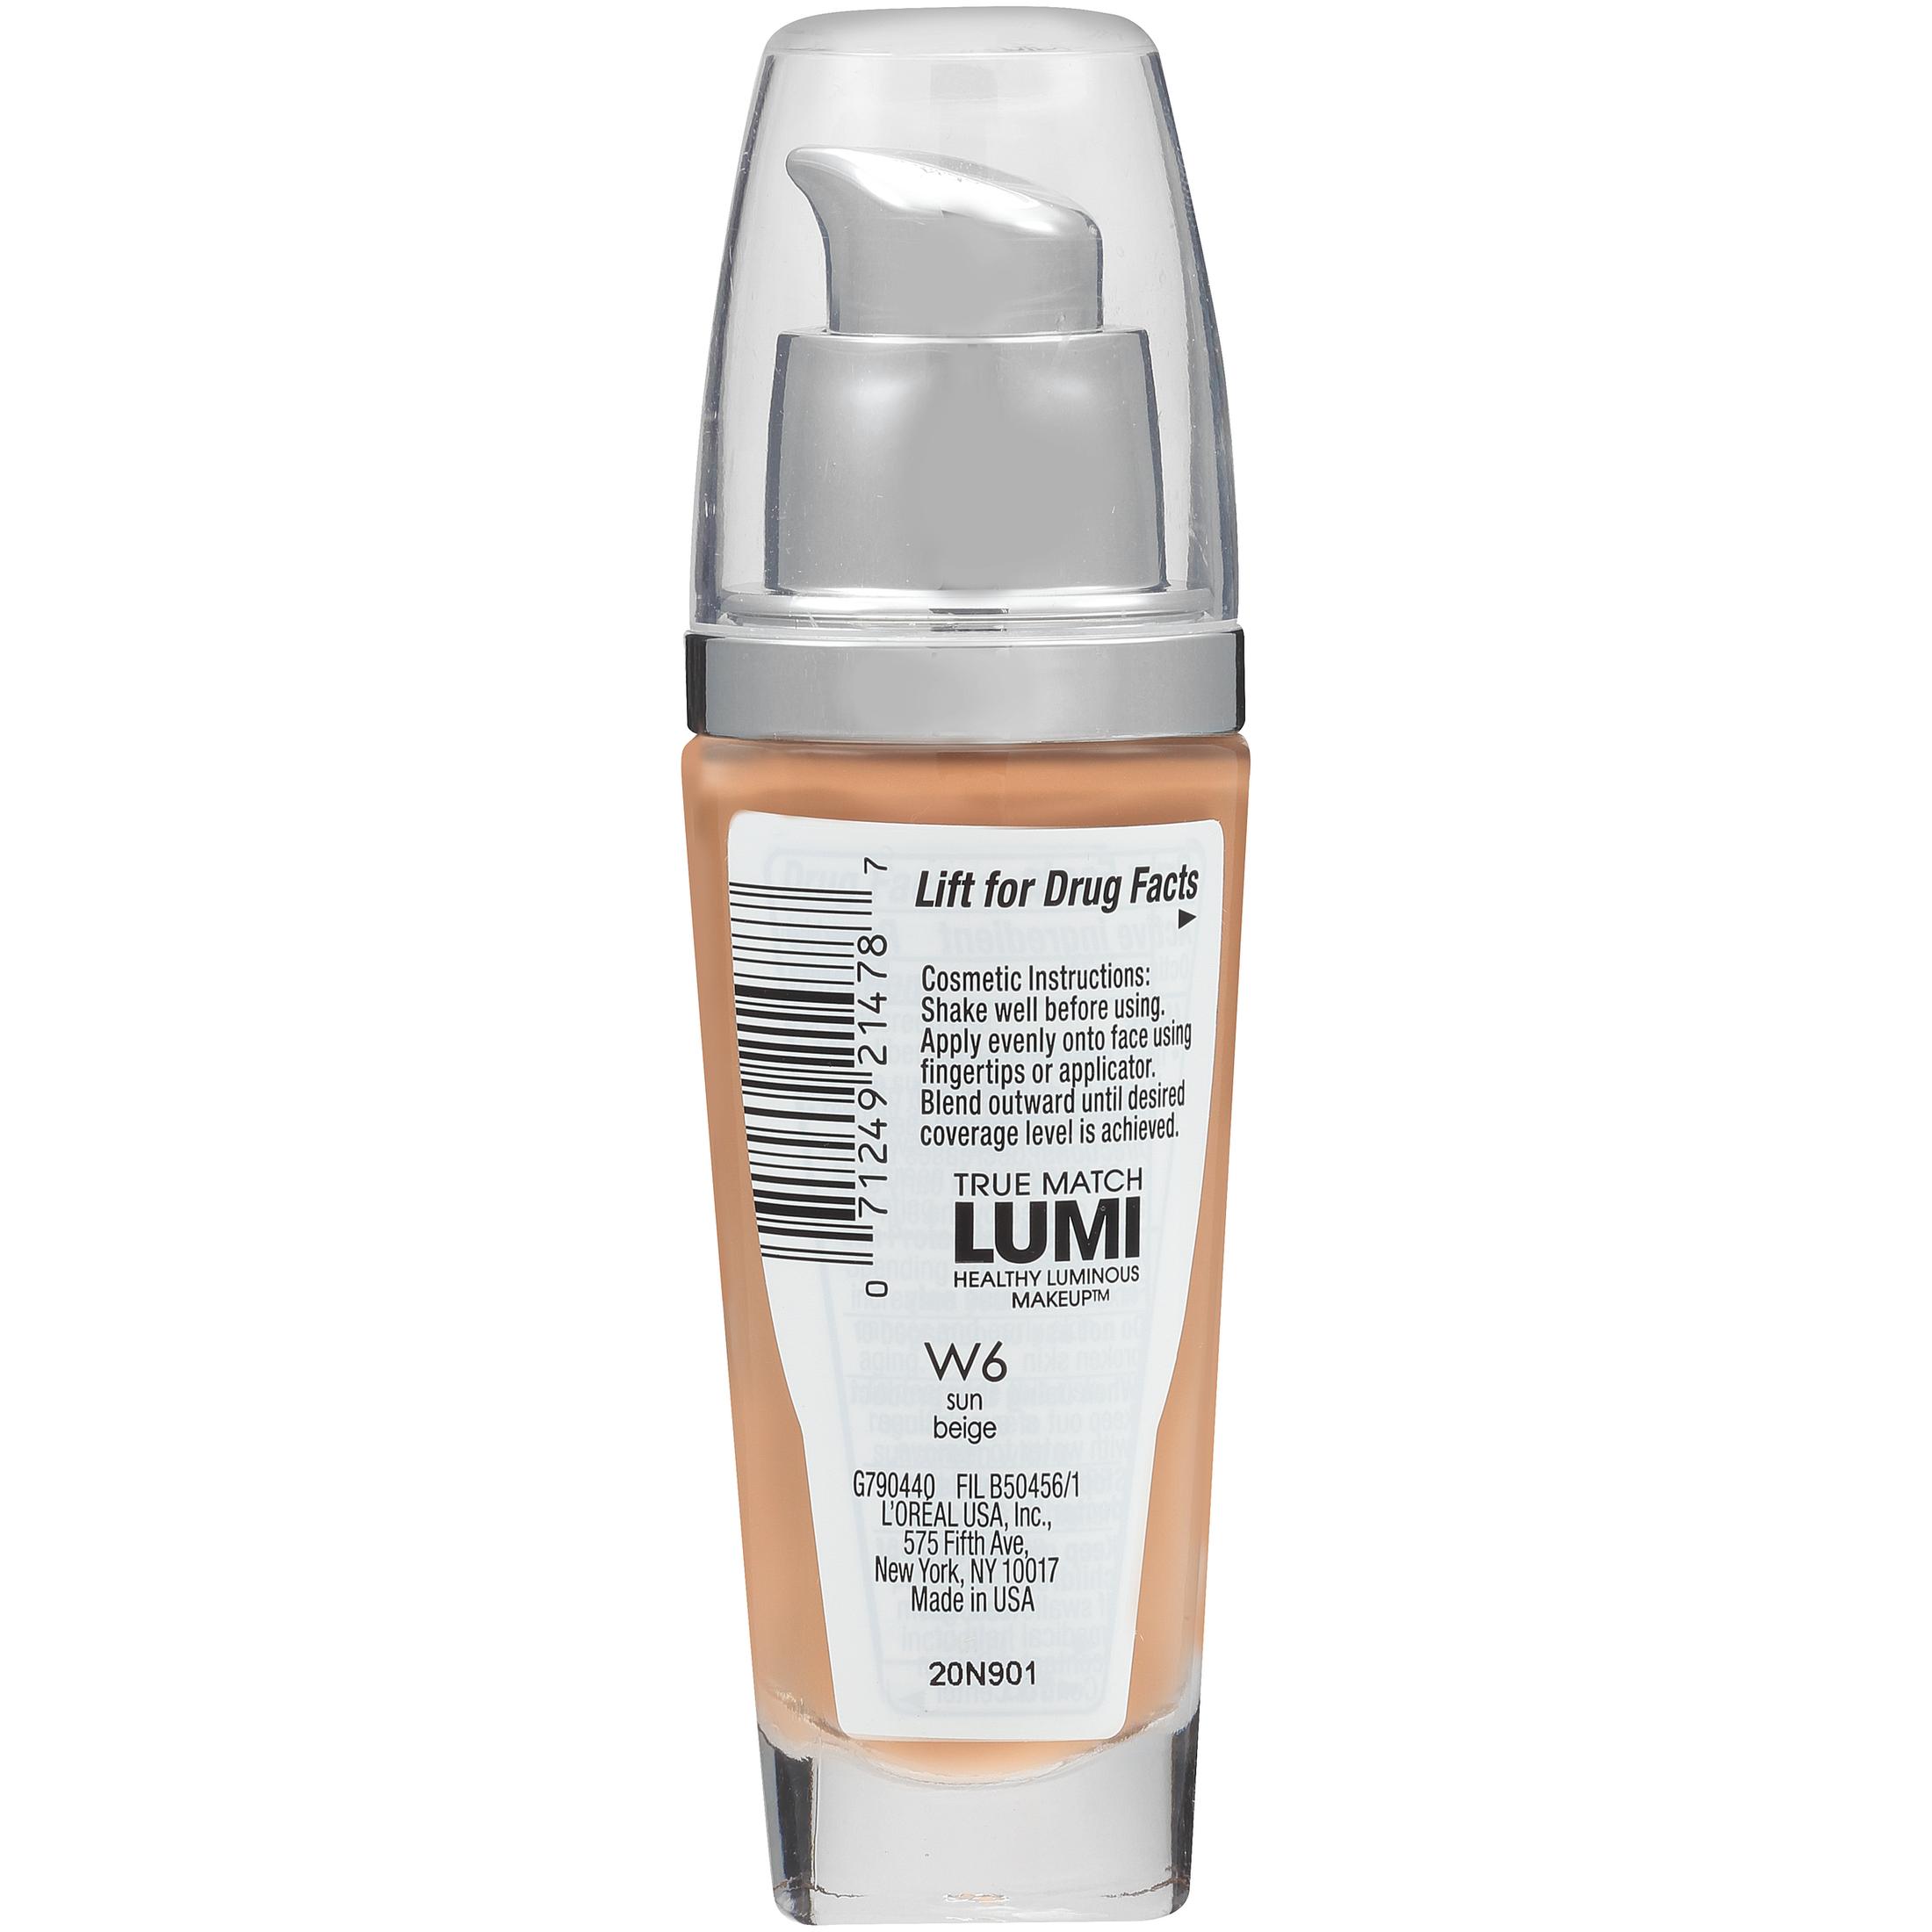 L'Oreal Paris True Match Lumi Liquid Foundation Makeup, W5 Sun Beige, 1 fl oz - image 3 of 10